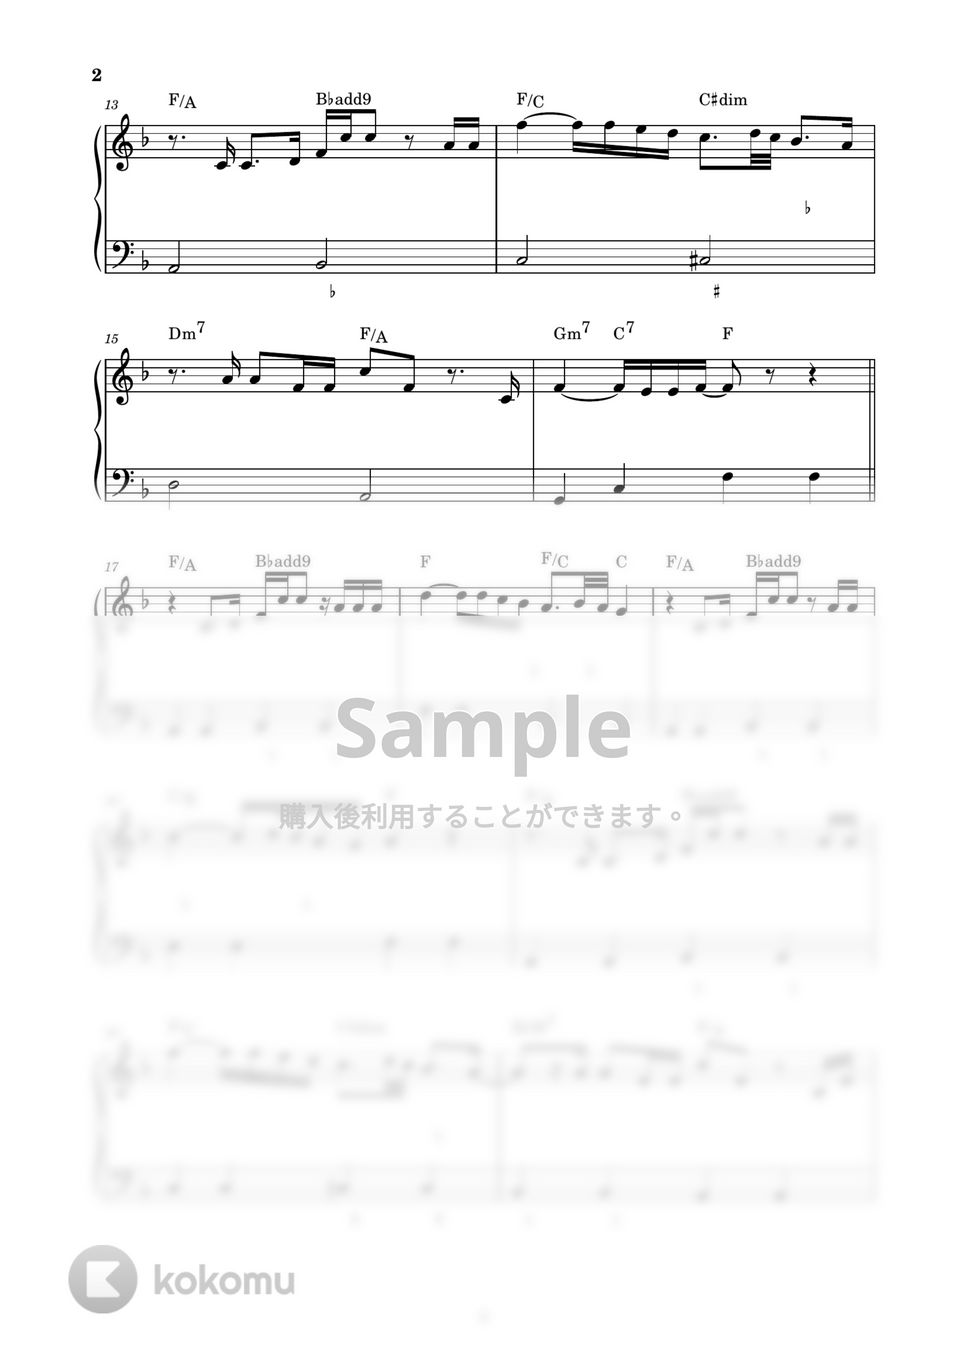 Mrs. GREEN APPLE - Soranji (ピアノ楽譜 / かんたん両手 / 歌詞付き / ドレミ付き / 初心者向き) by piano.tokyo